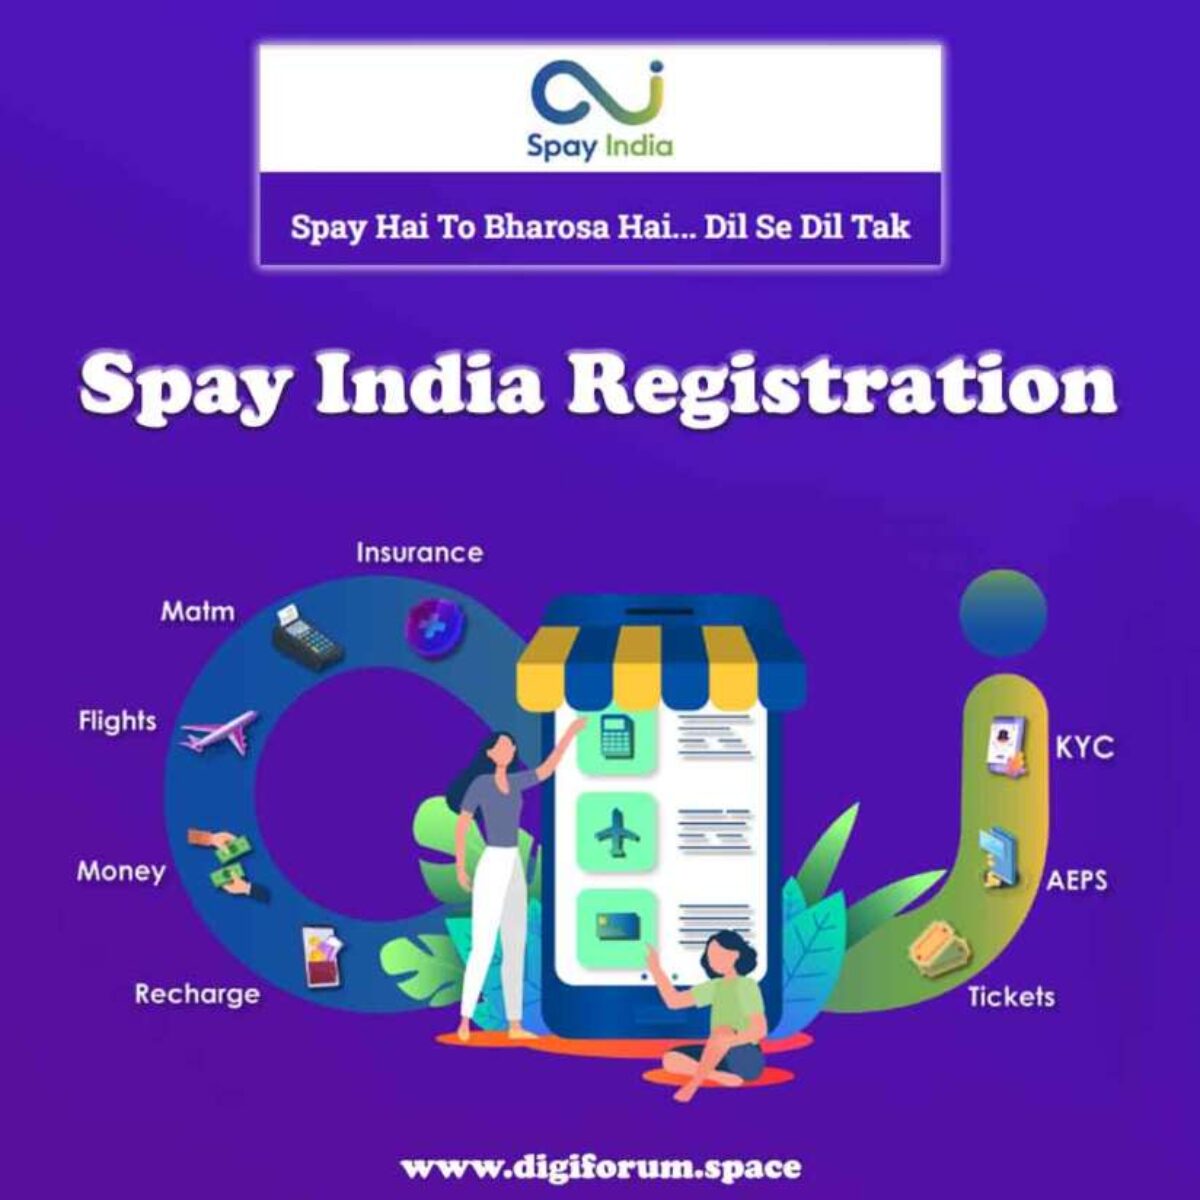 Spay India Registration - Digiforum Space